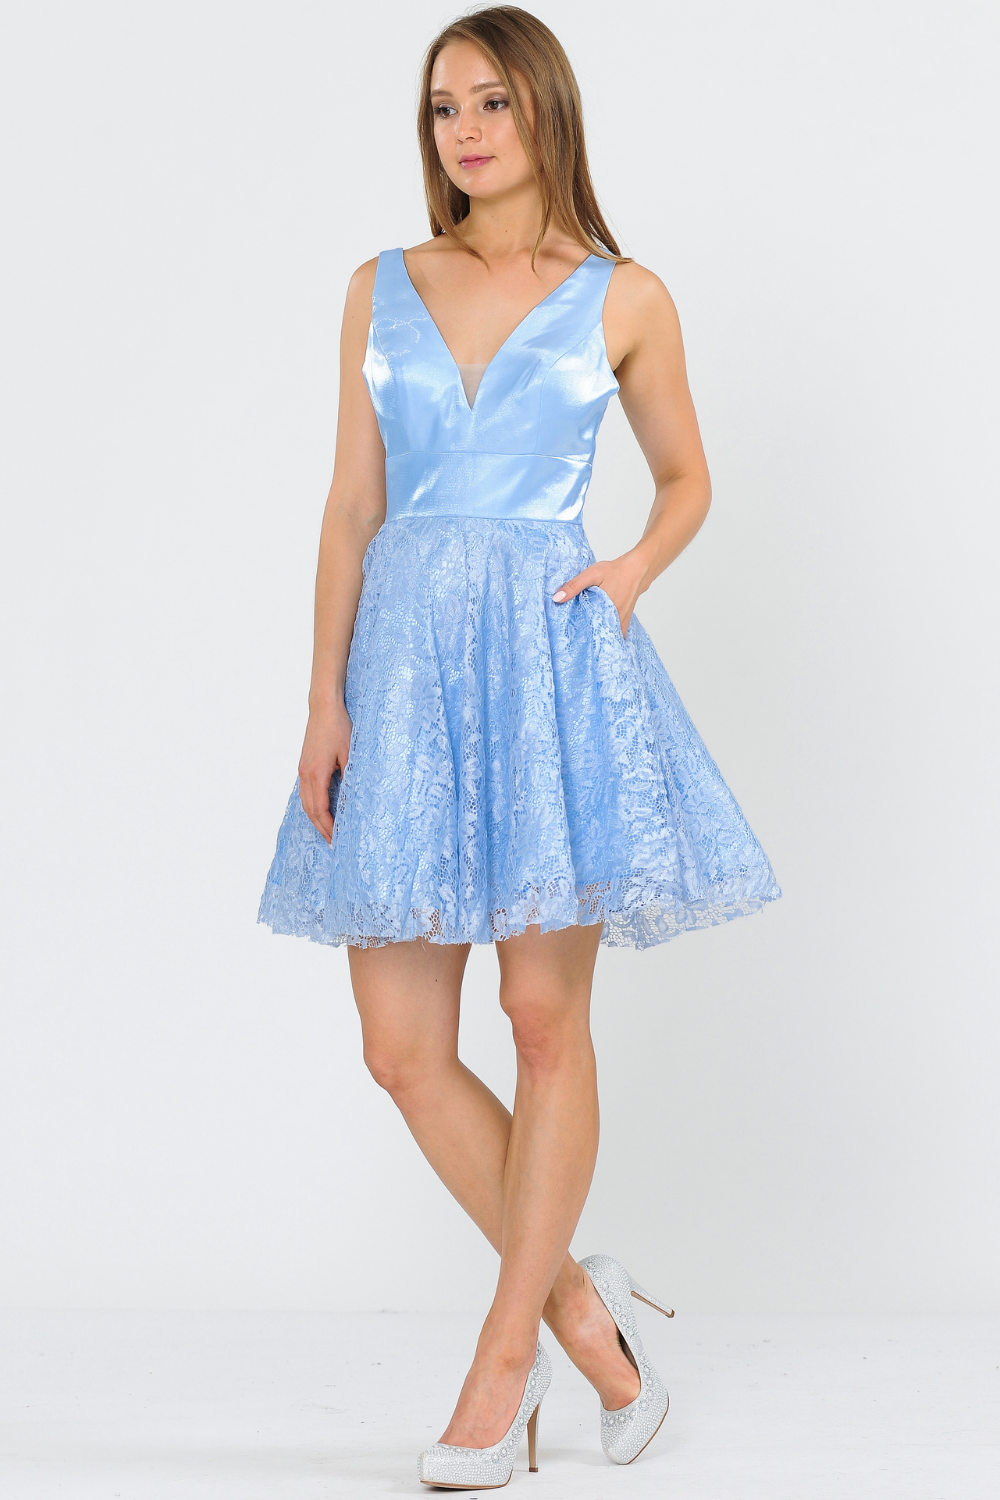 A-line Short Homecoming Dress - LAY8418